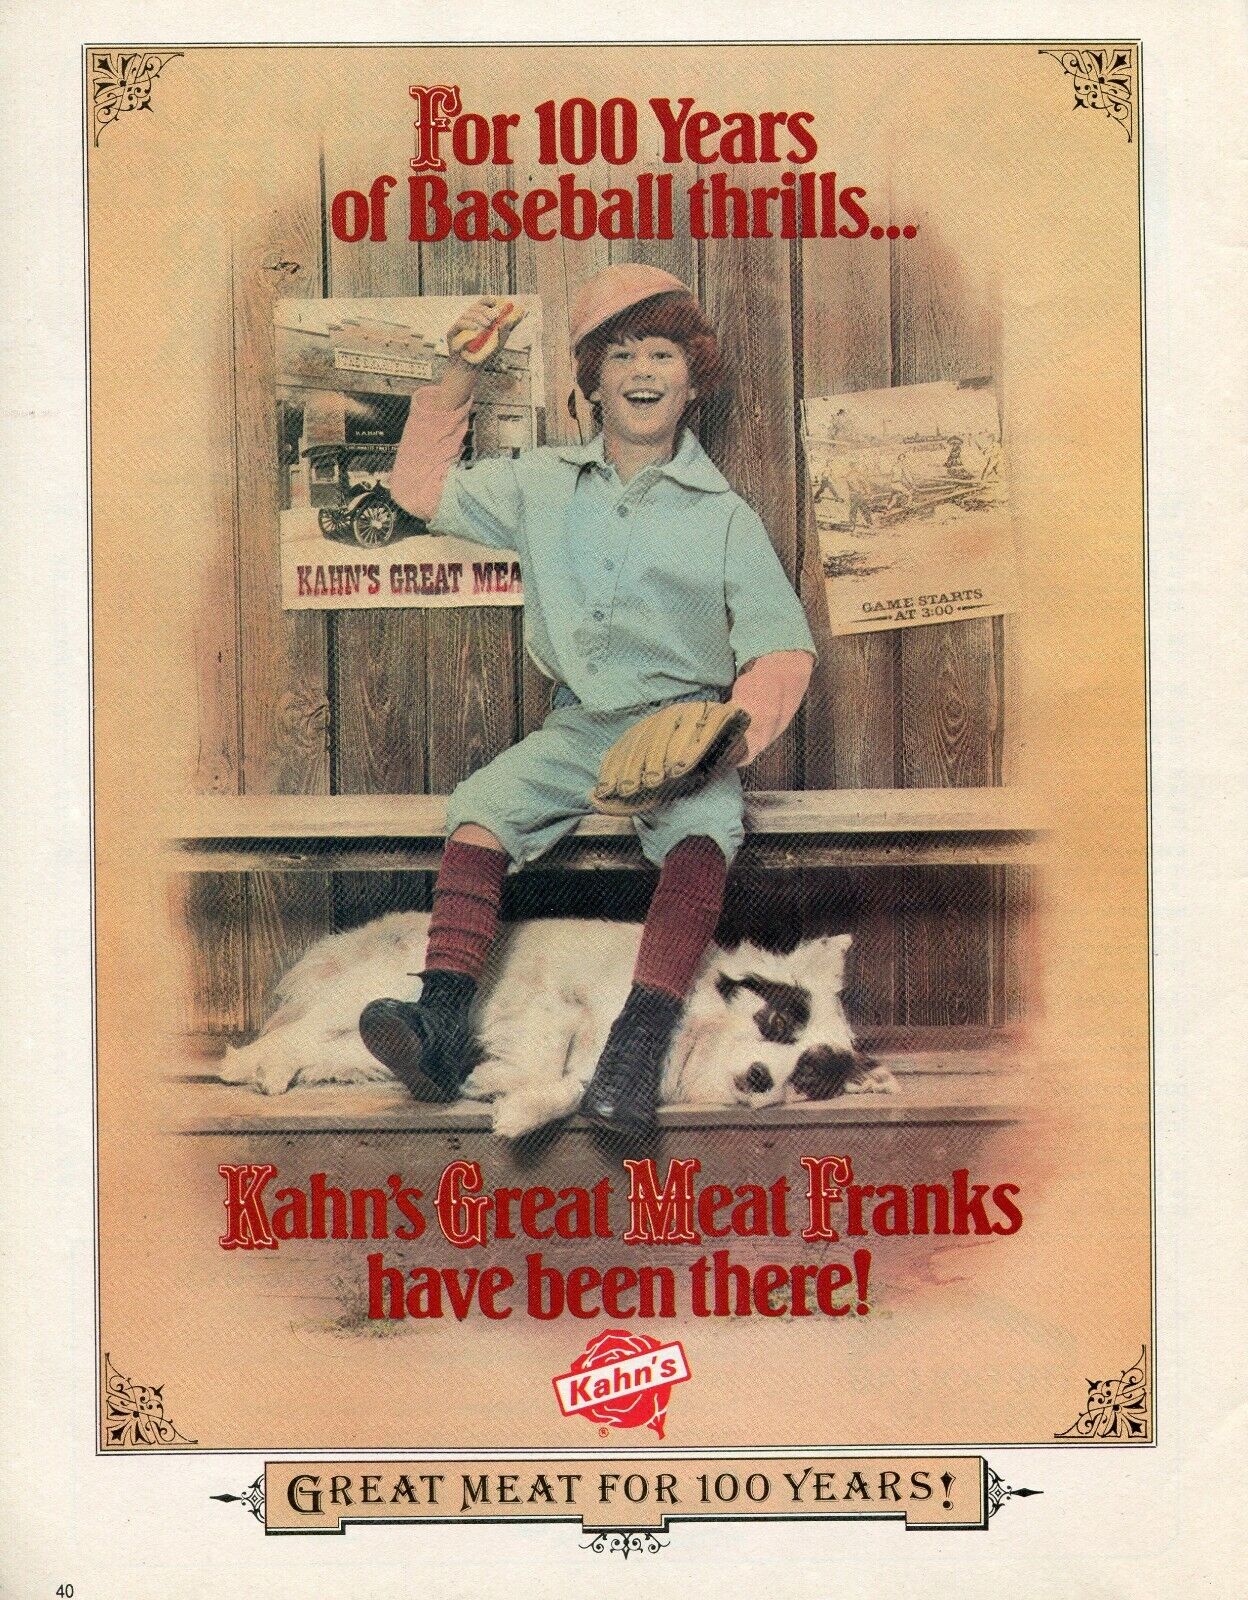 1982 Print Ad of Kahn\'s Great Meat Franks Hotdogs 100 Years of Baseball Thrills